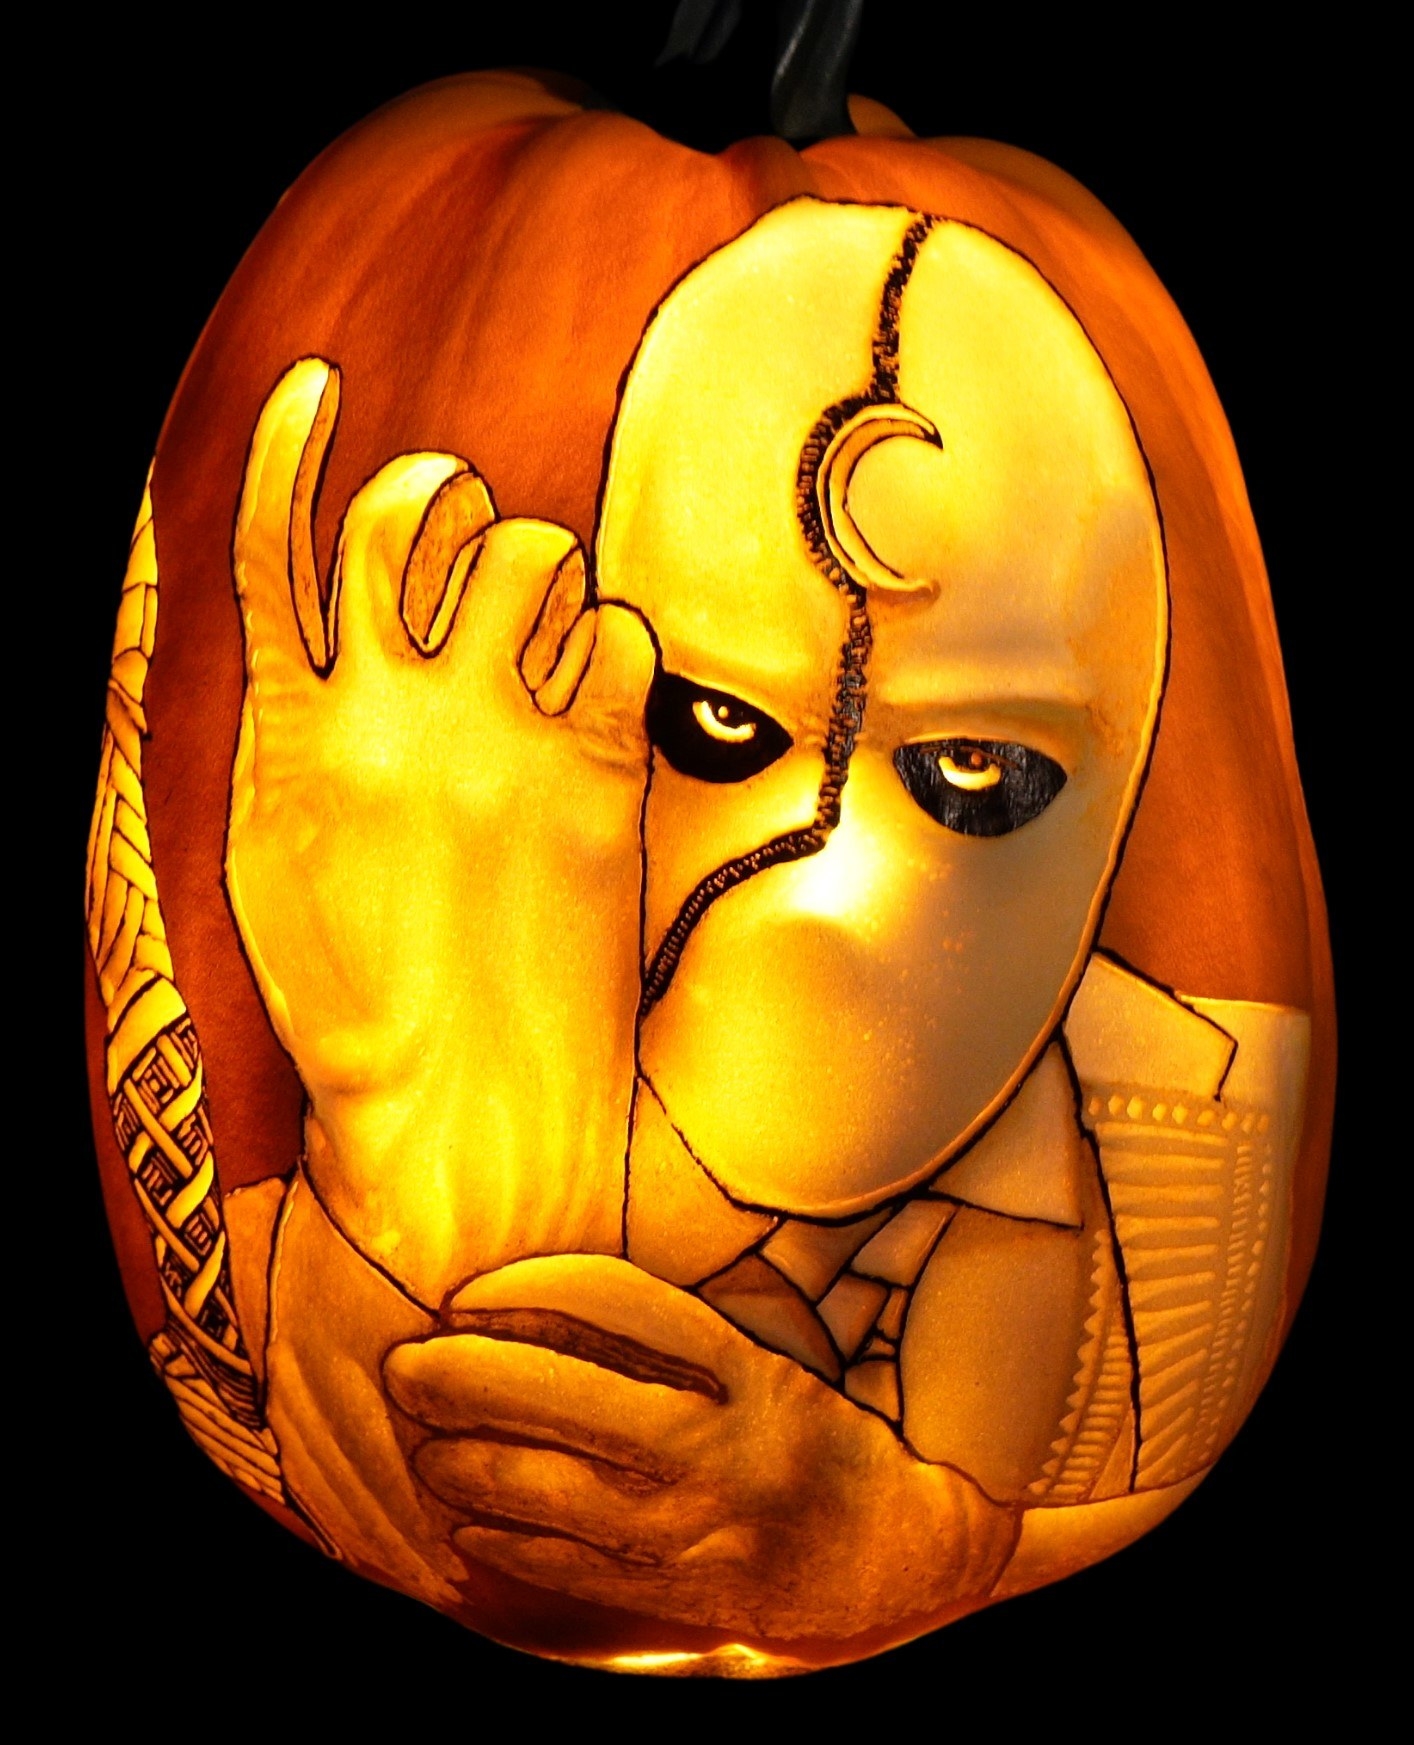 Mr. Knight carved on a pumpkin